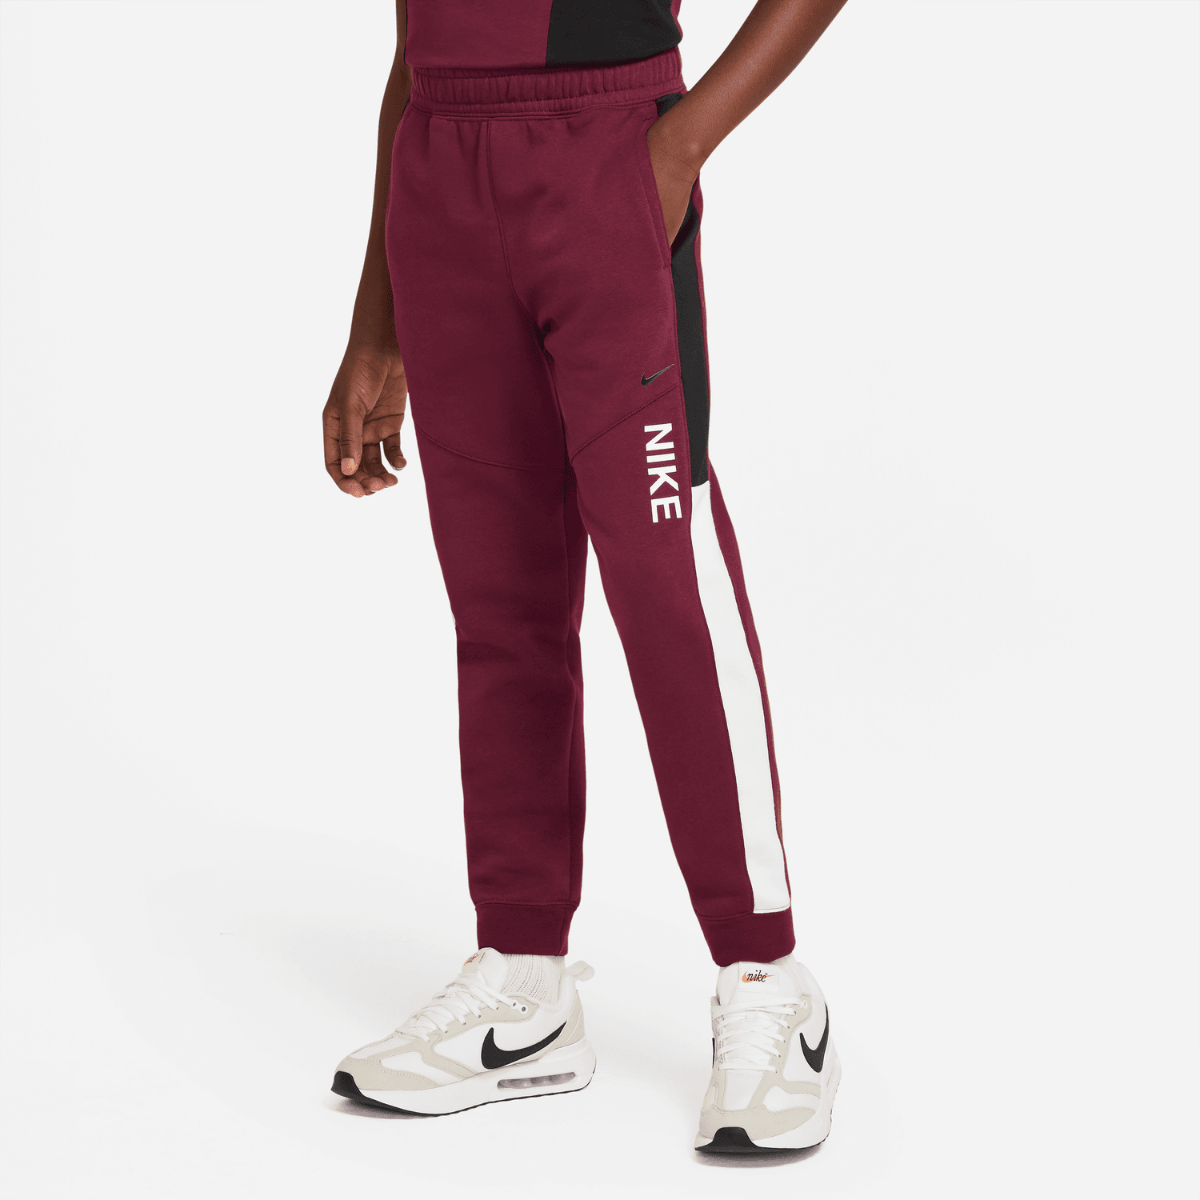 Pantalón Nike Sportswear Tech Fleece Junior - Burdeos/Blanco/Noir